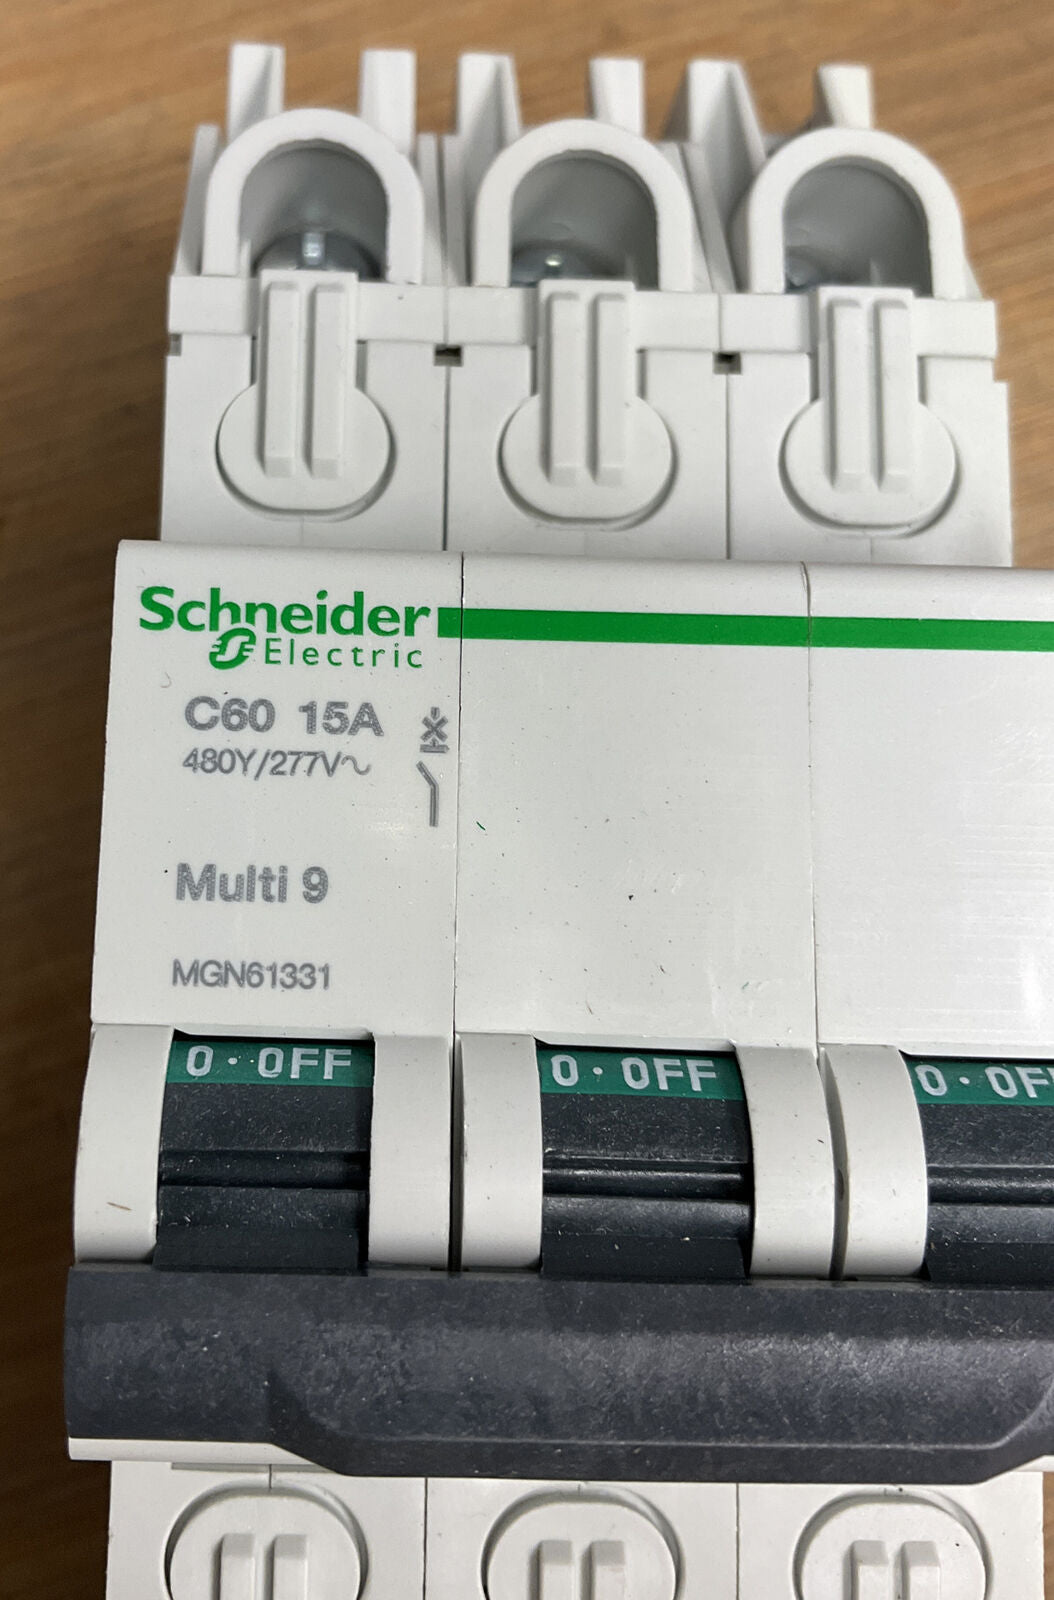 Schneider Electric MGN61331 New MULTI 9 C60 C 15A CIRCUIT BREAKER (RE218) - 0